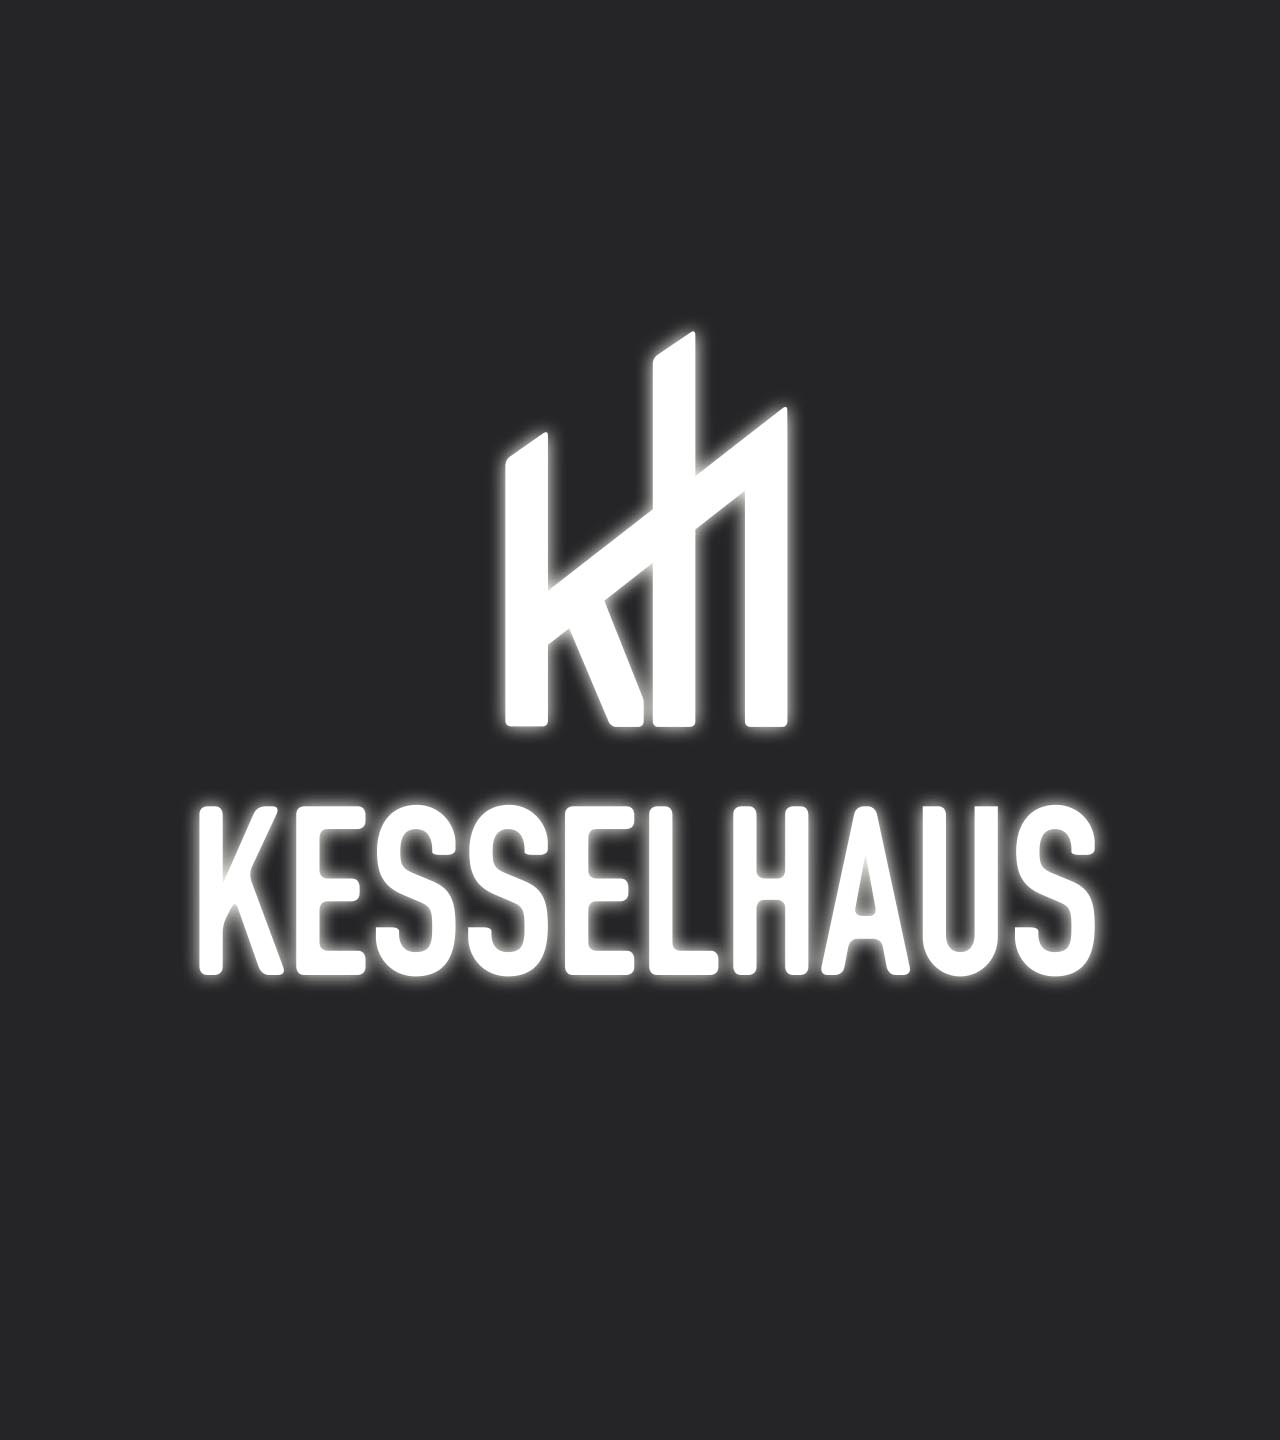 Kesselhaus_S_07_desktop_20220505_m_msr